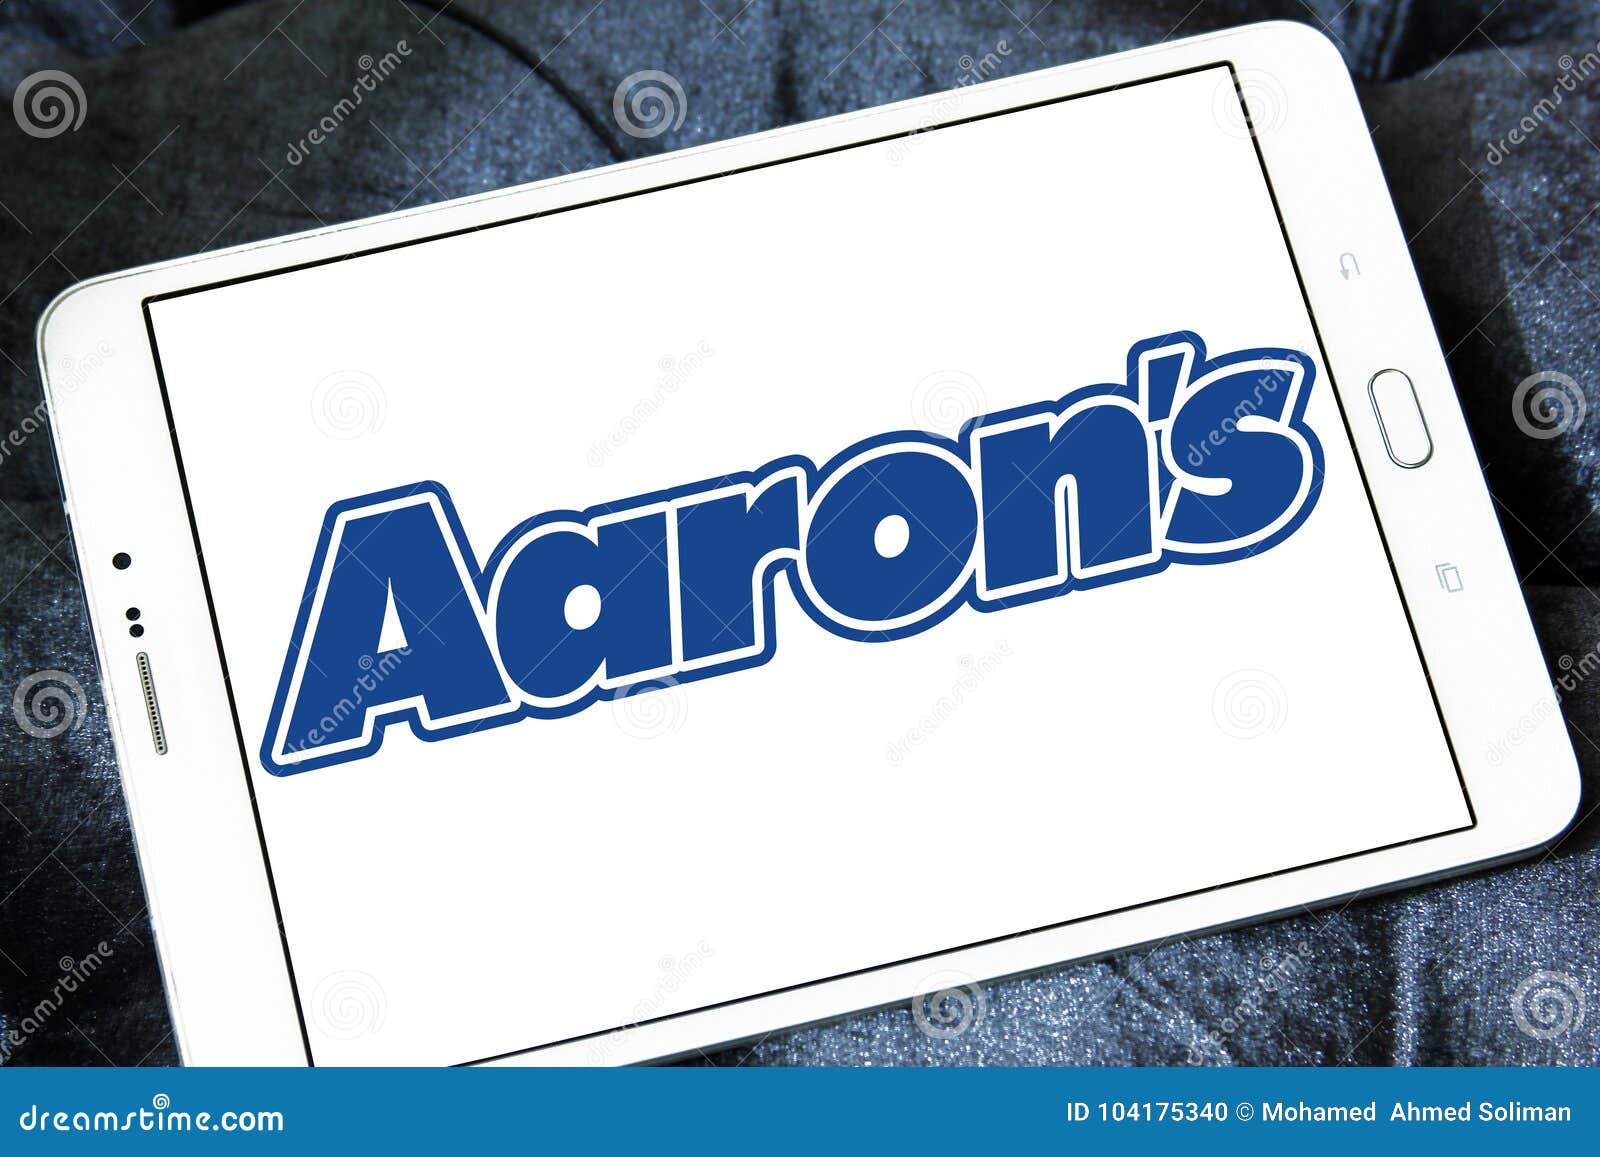 Aaron S Company Logo Editorial Image Image Of Samsung 104175340